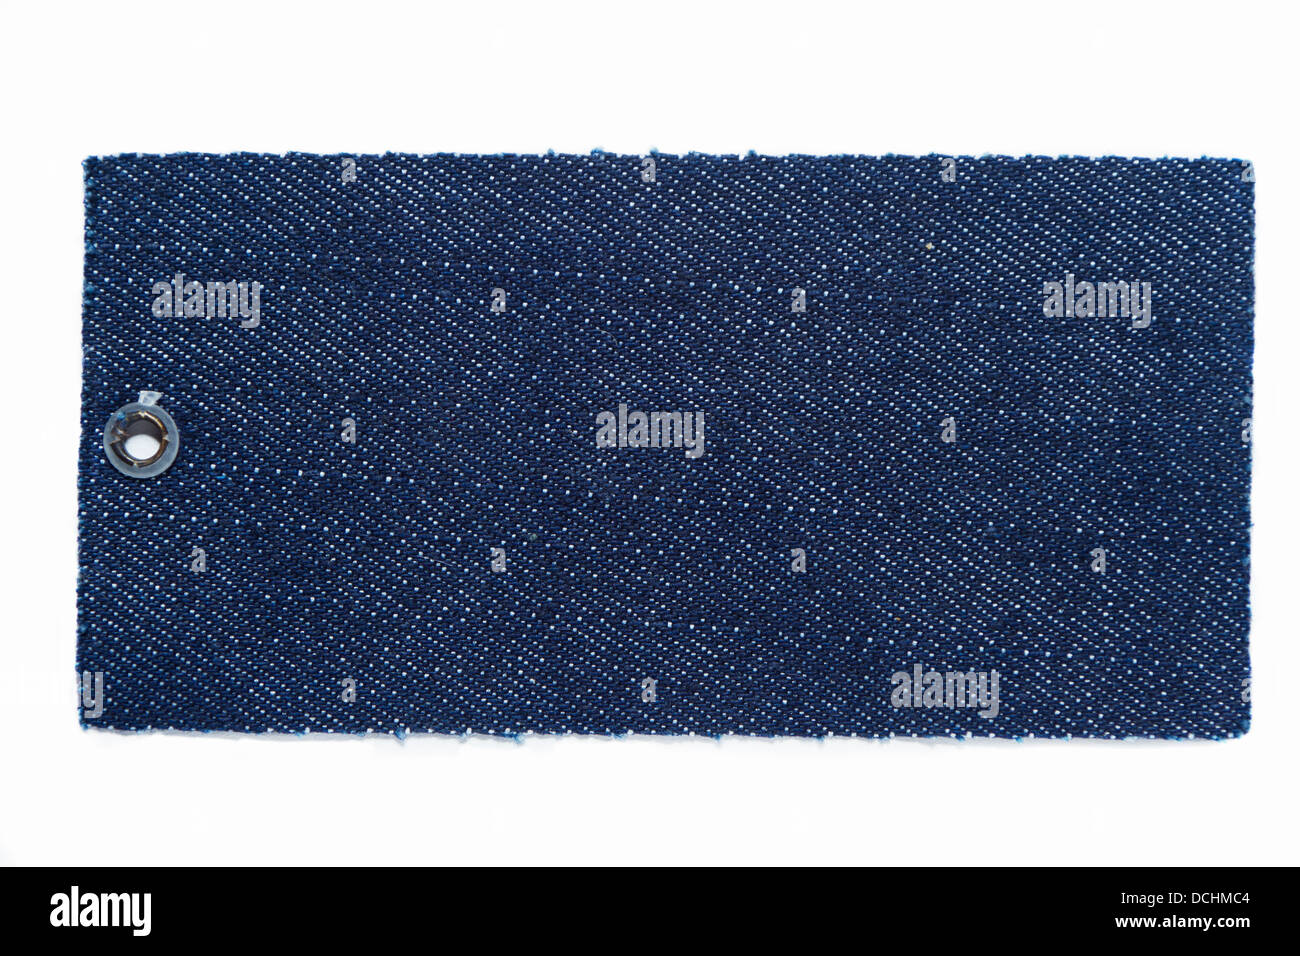 Denim cloth label on white Stock Photo